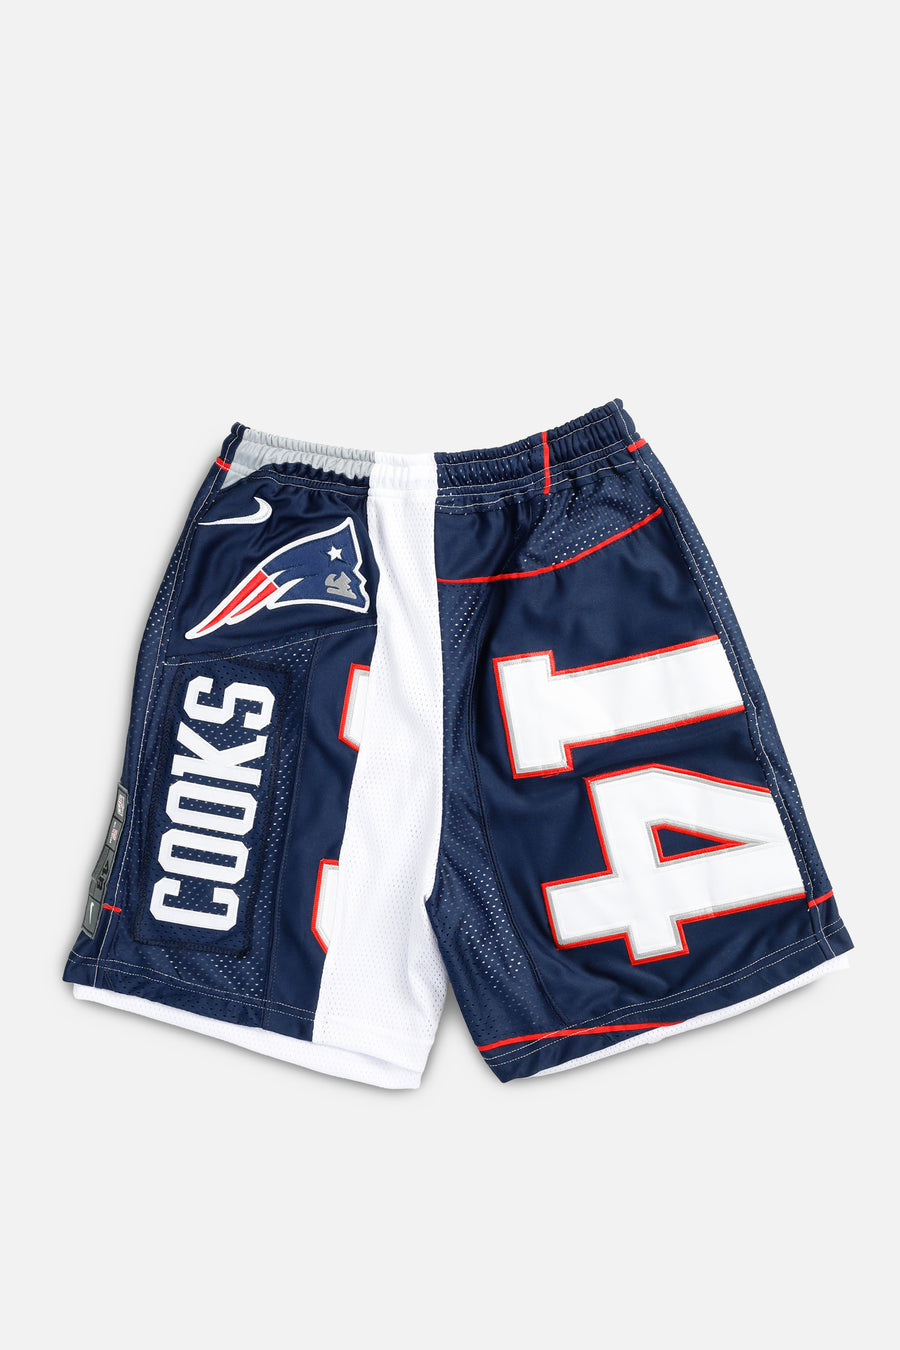 Unisex Rework New England Patriots NFL Jersey Shorts - S